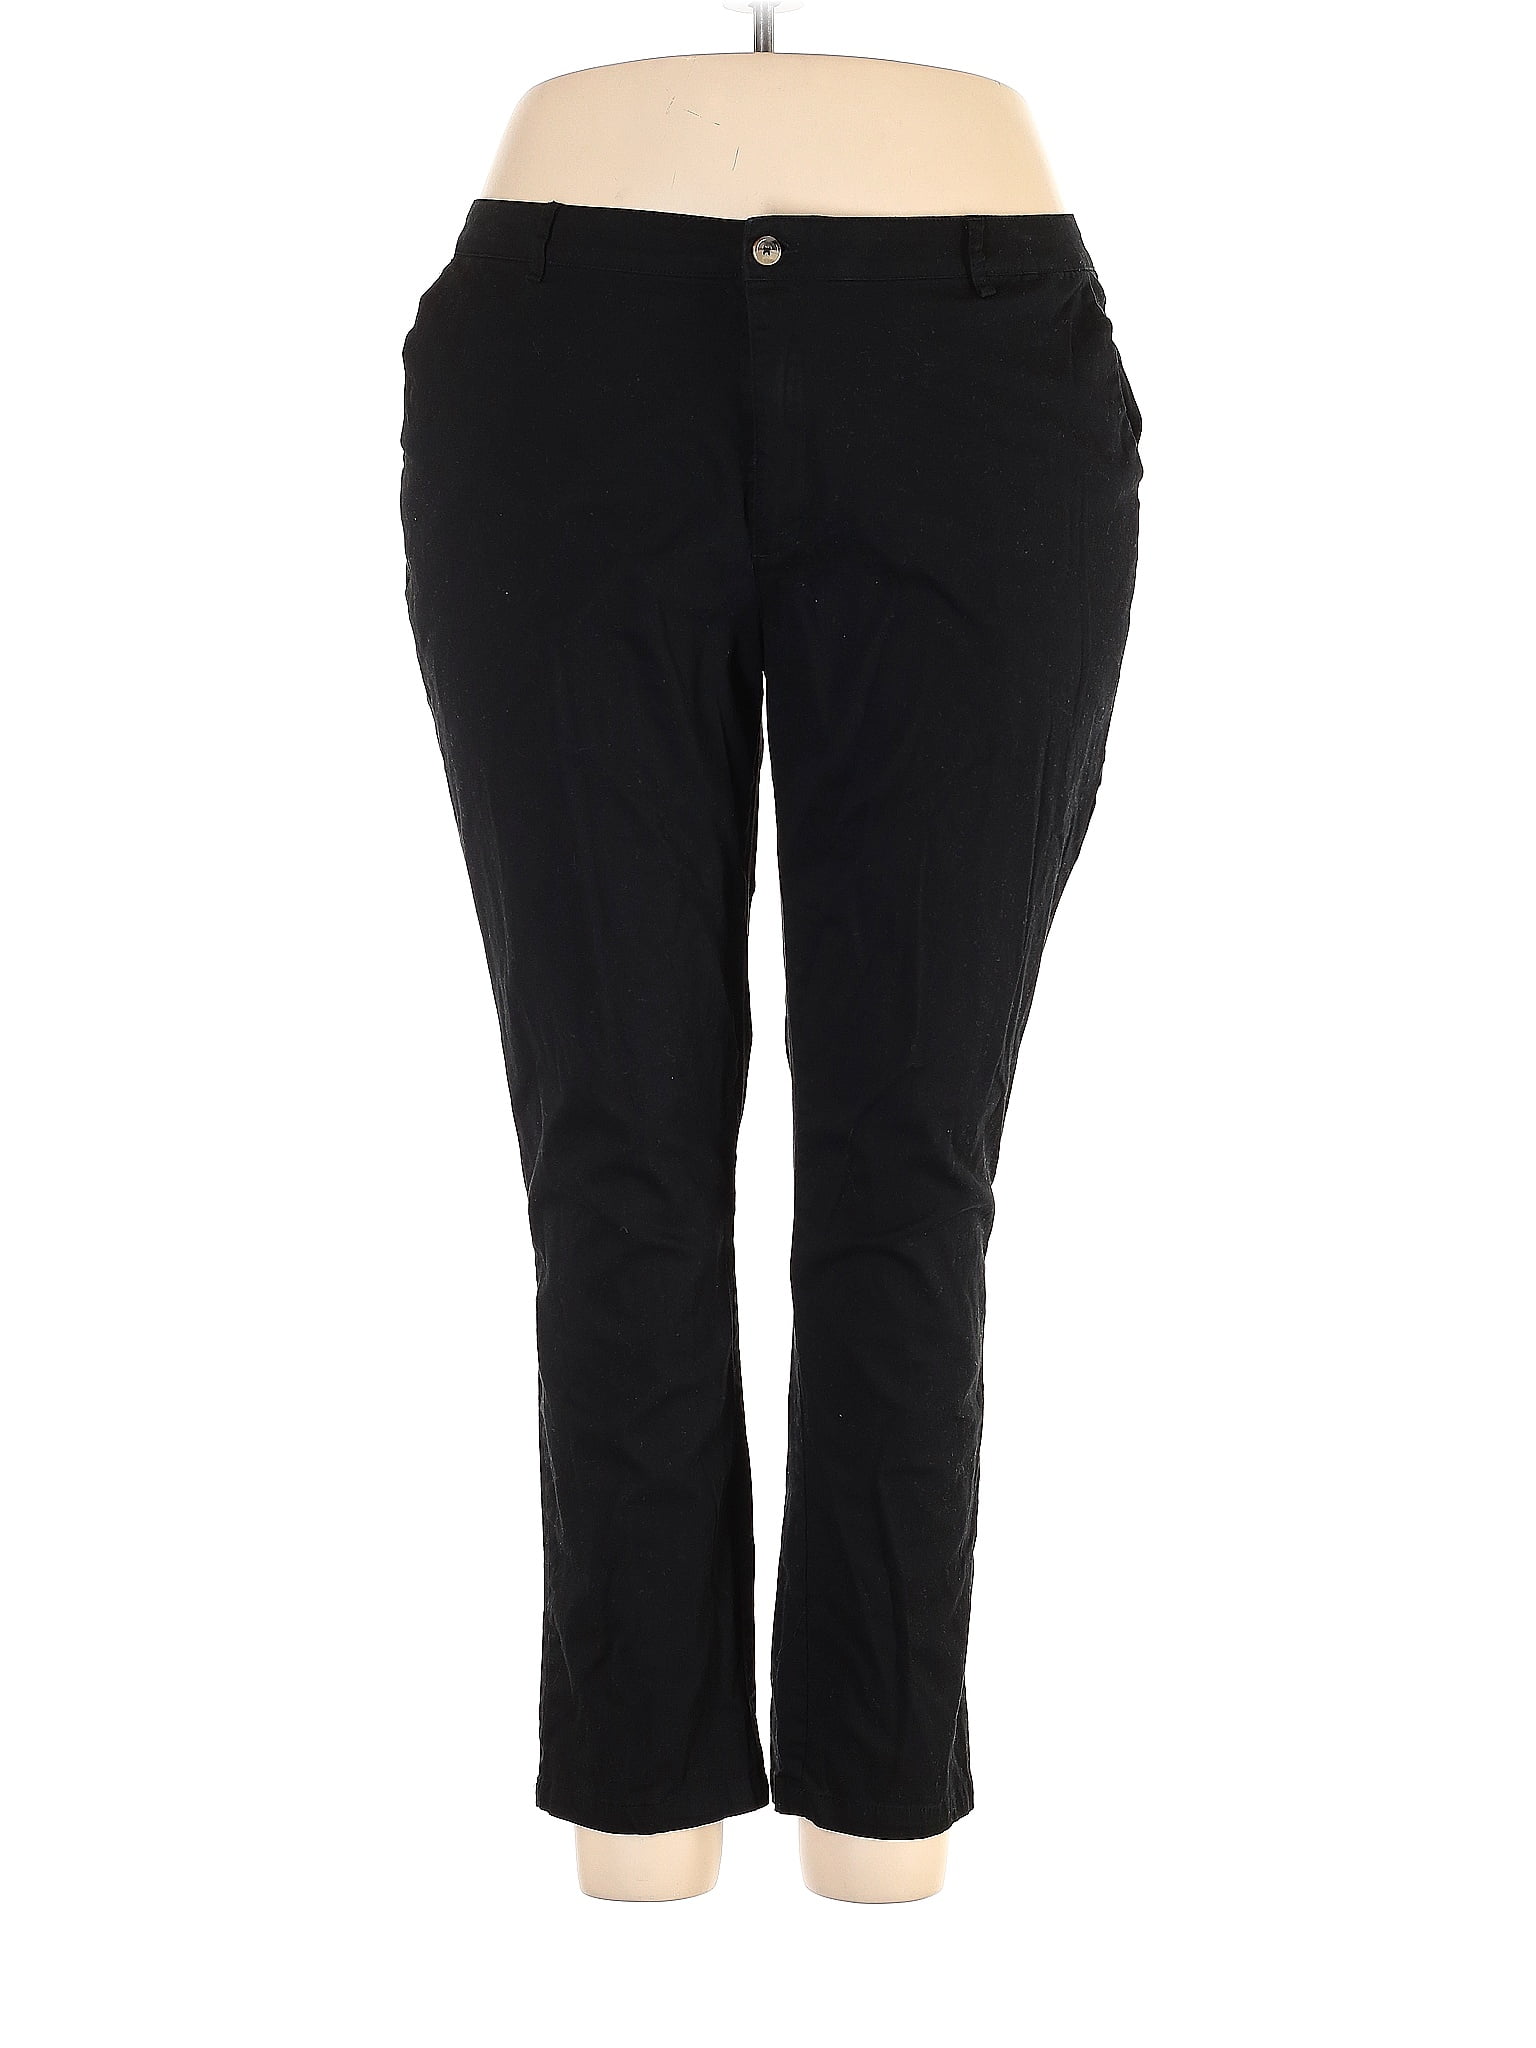 JoyLab Black Casual Pants Size 2X (Plus) - 40% off